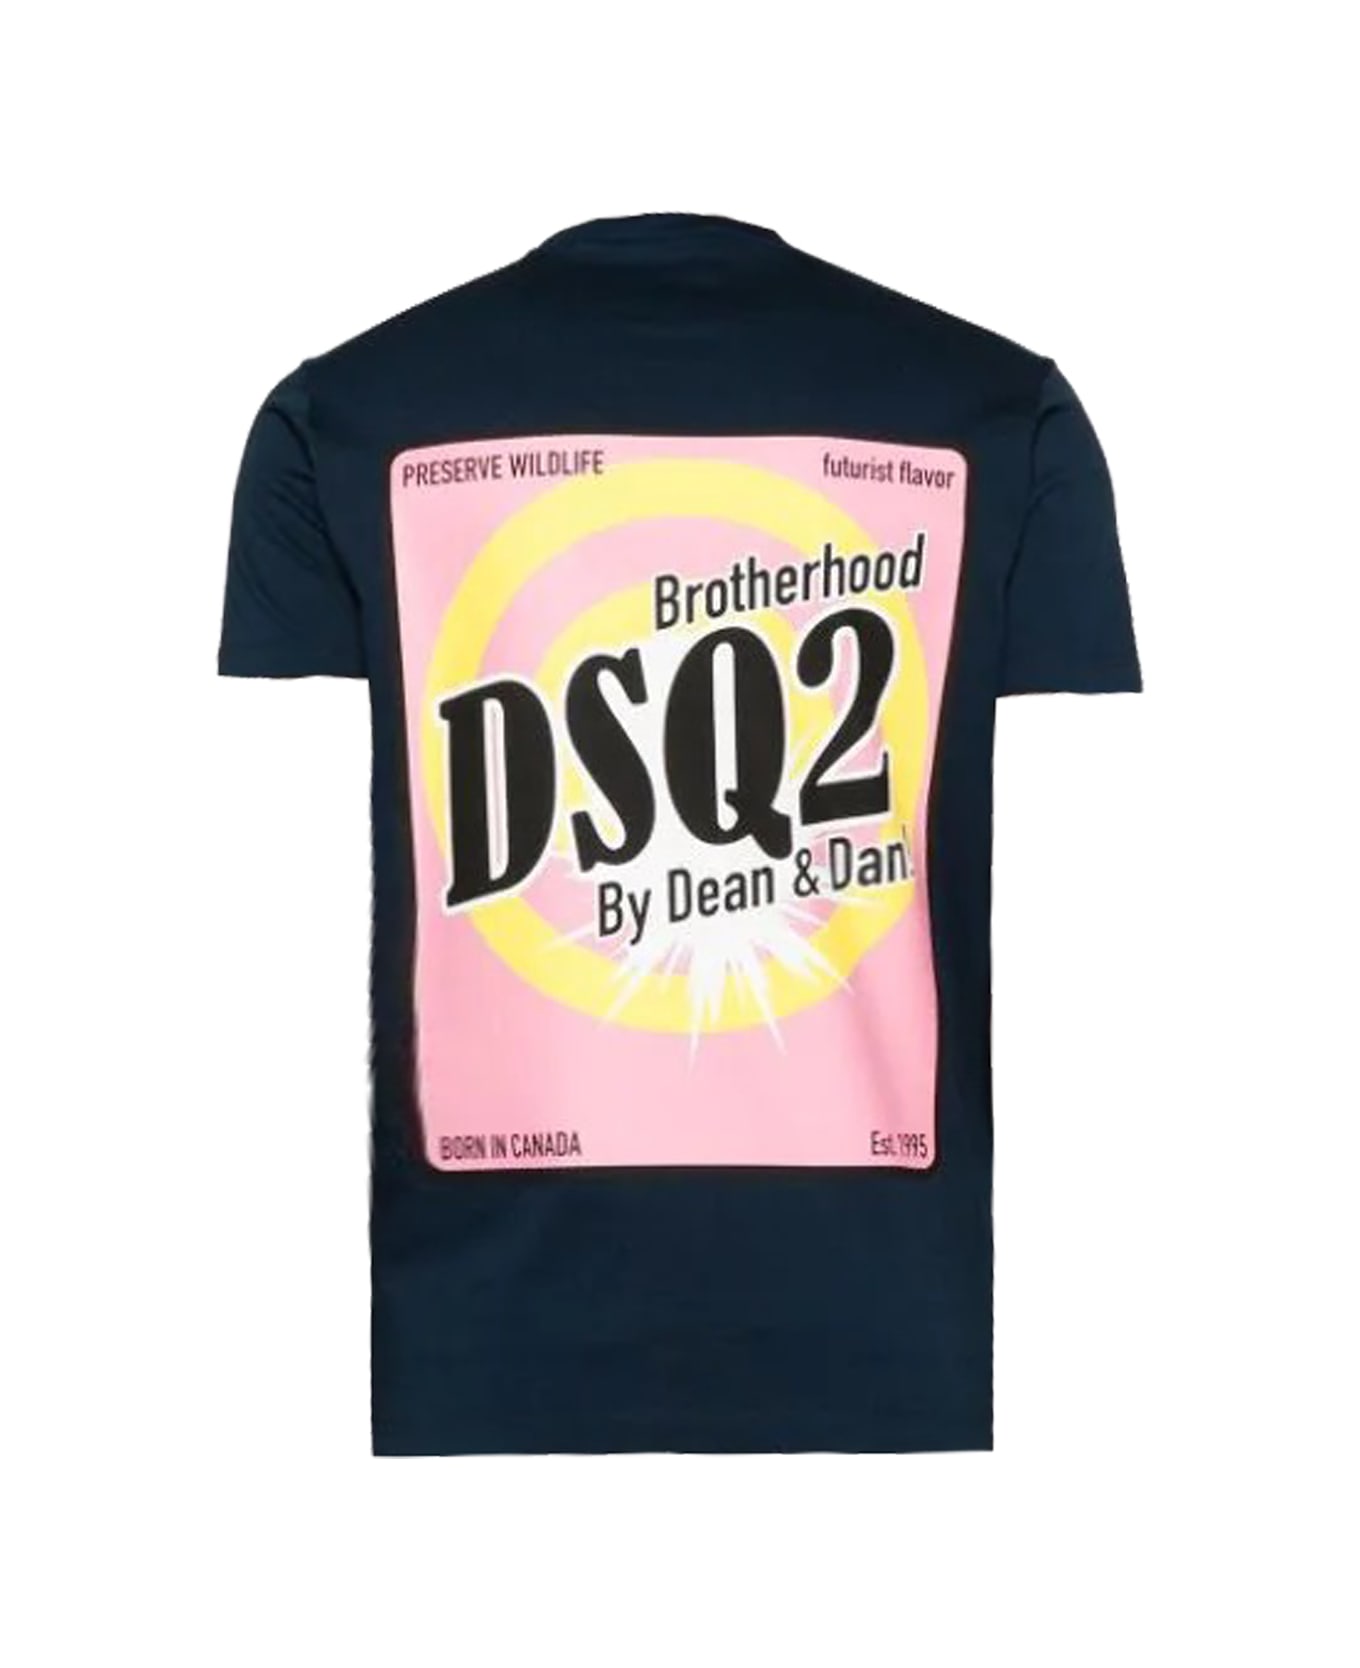 Dsquared2 T-shirt - Blue